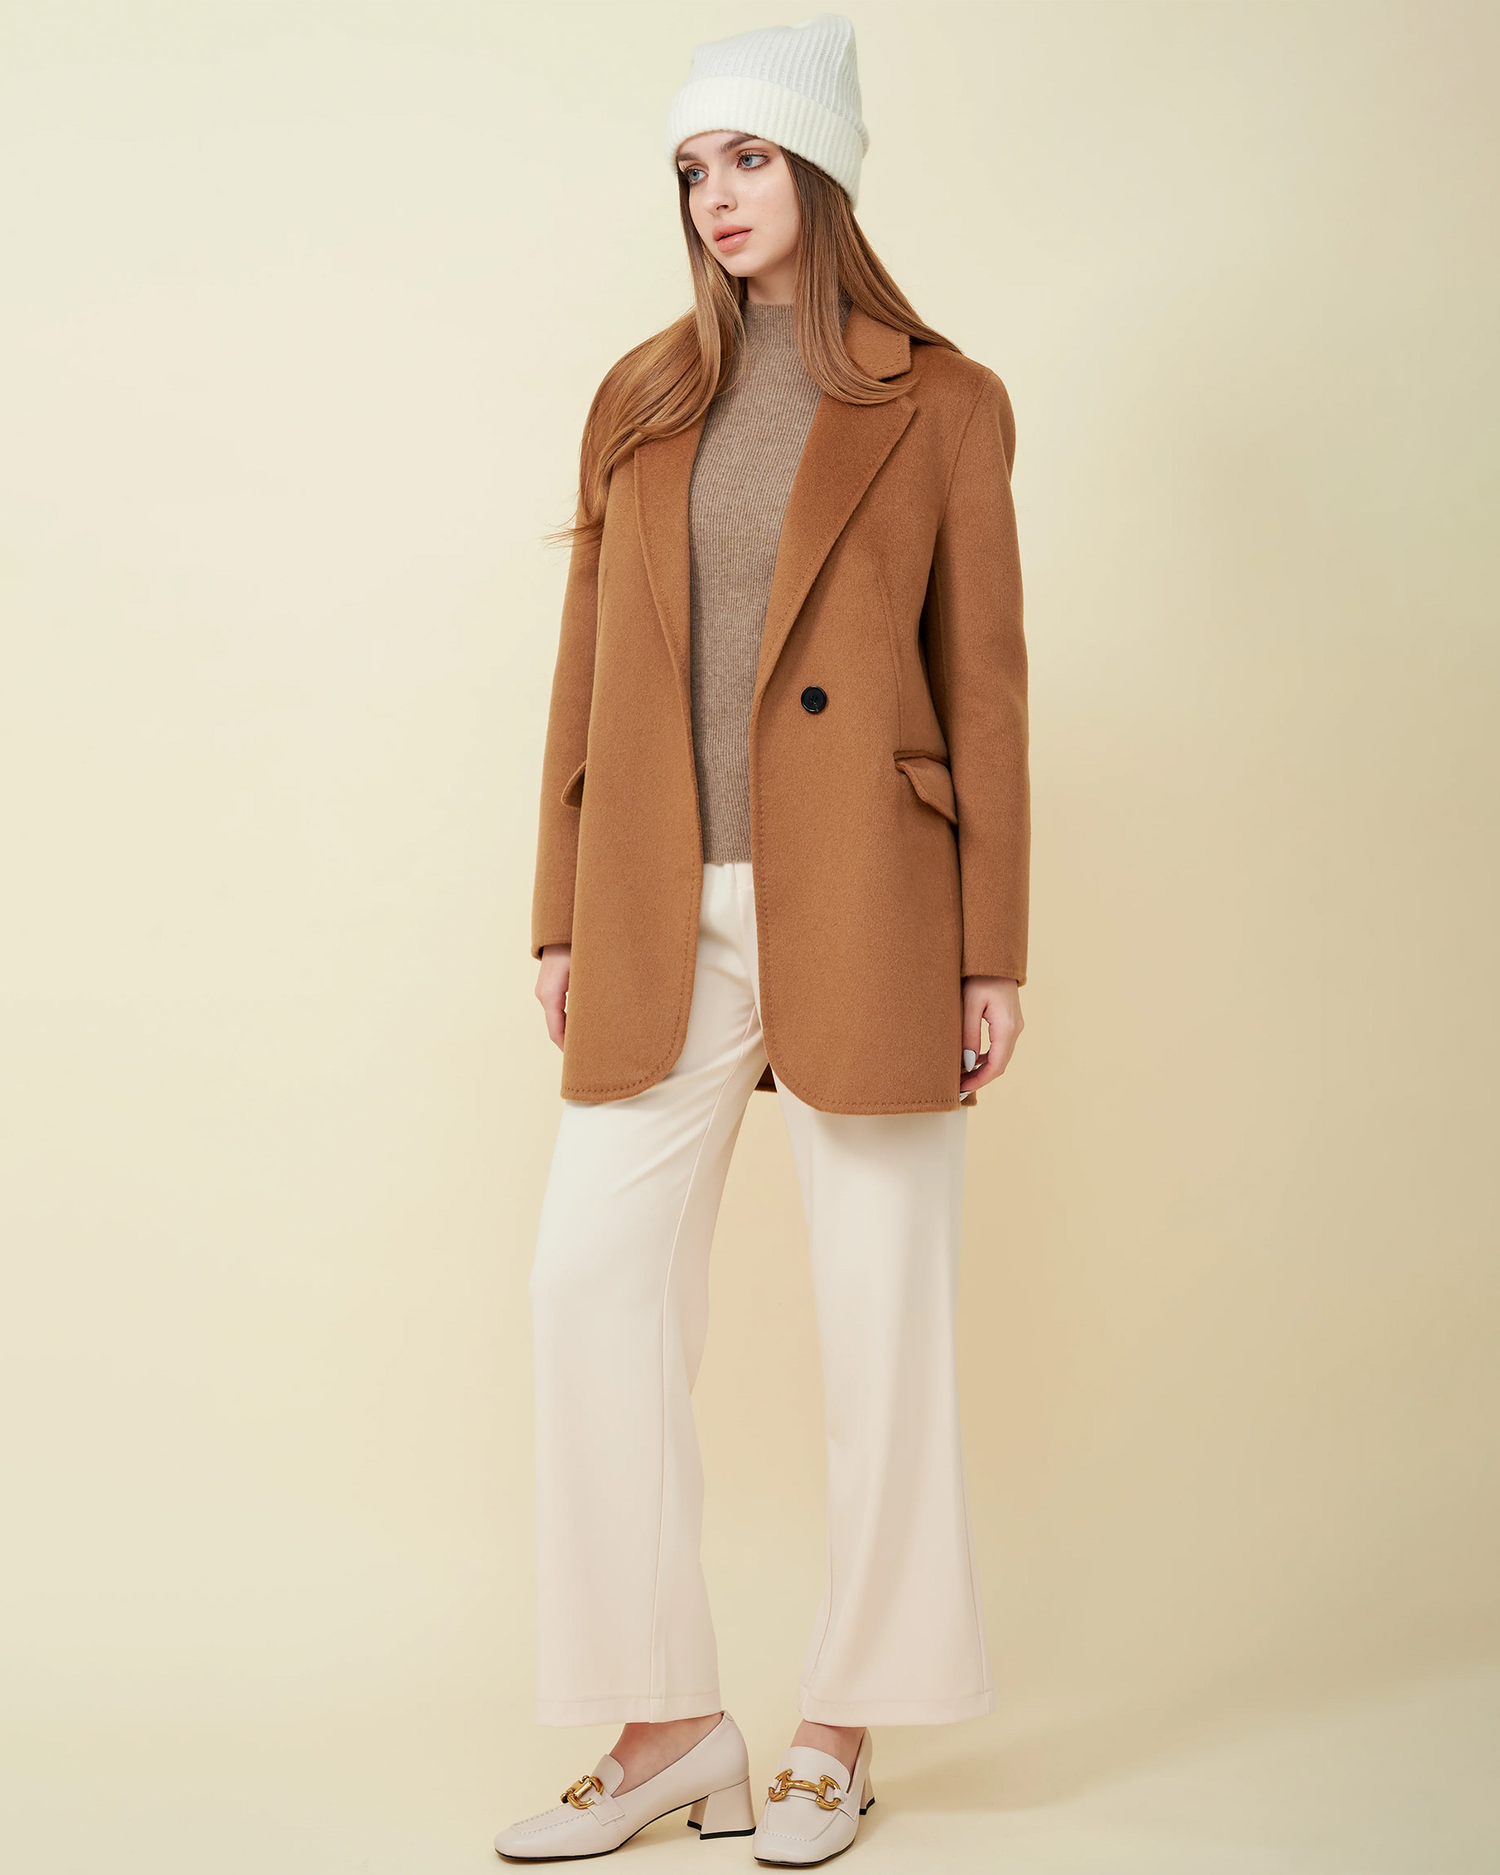 blazer hat sweater pants loafer minimalist look fashionista fashionnova elegance luxury fallfashion jacket knit outfit cashmere style instagram